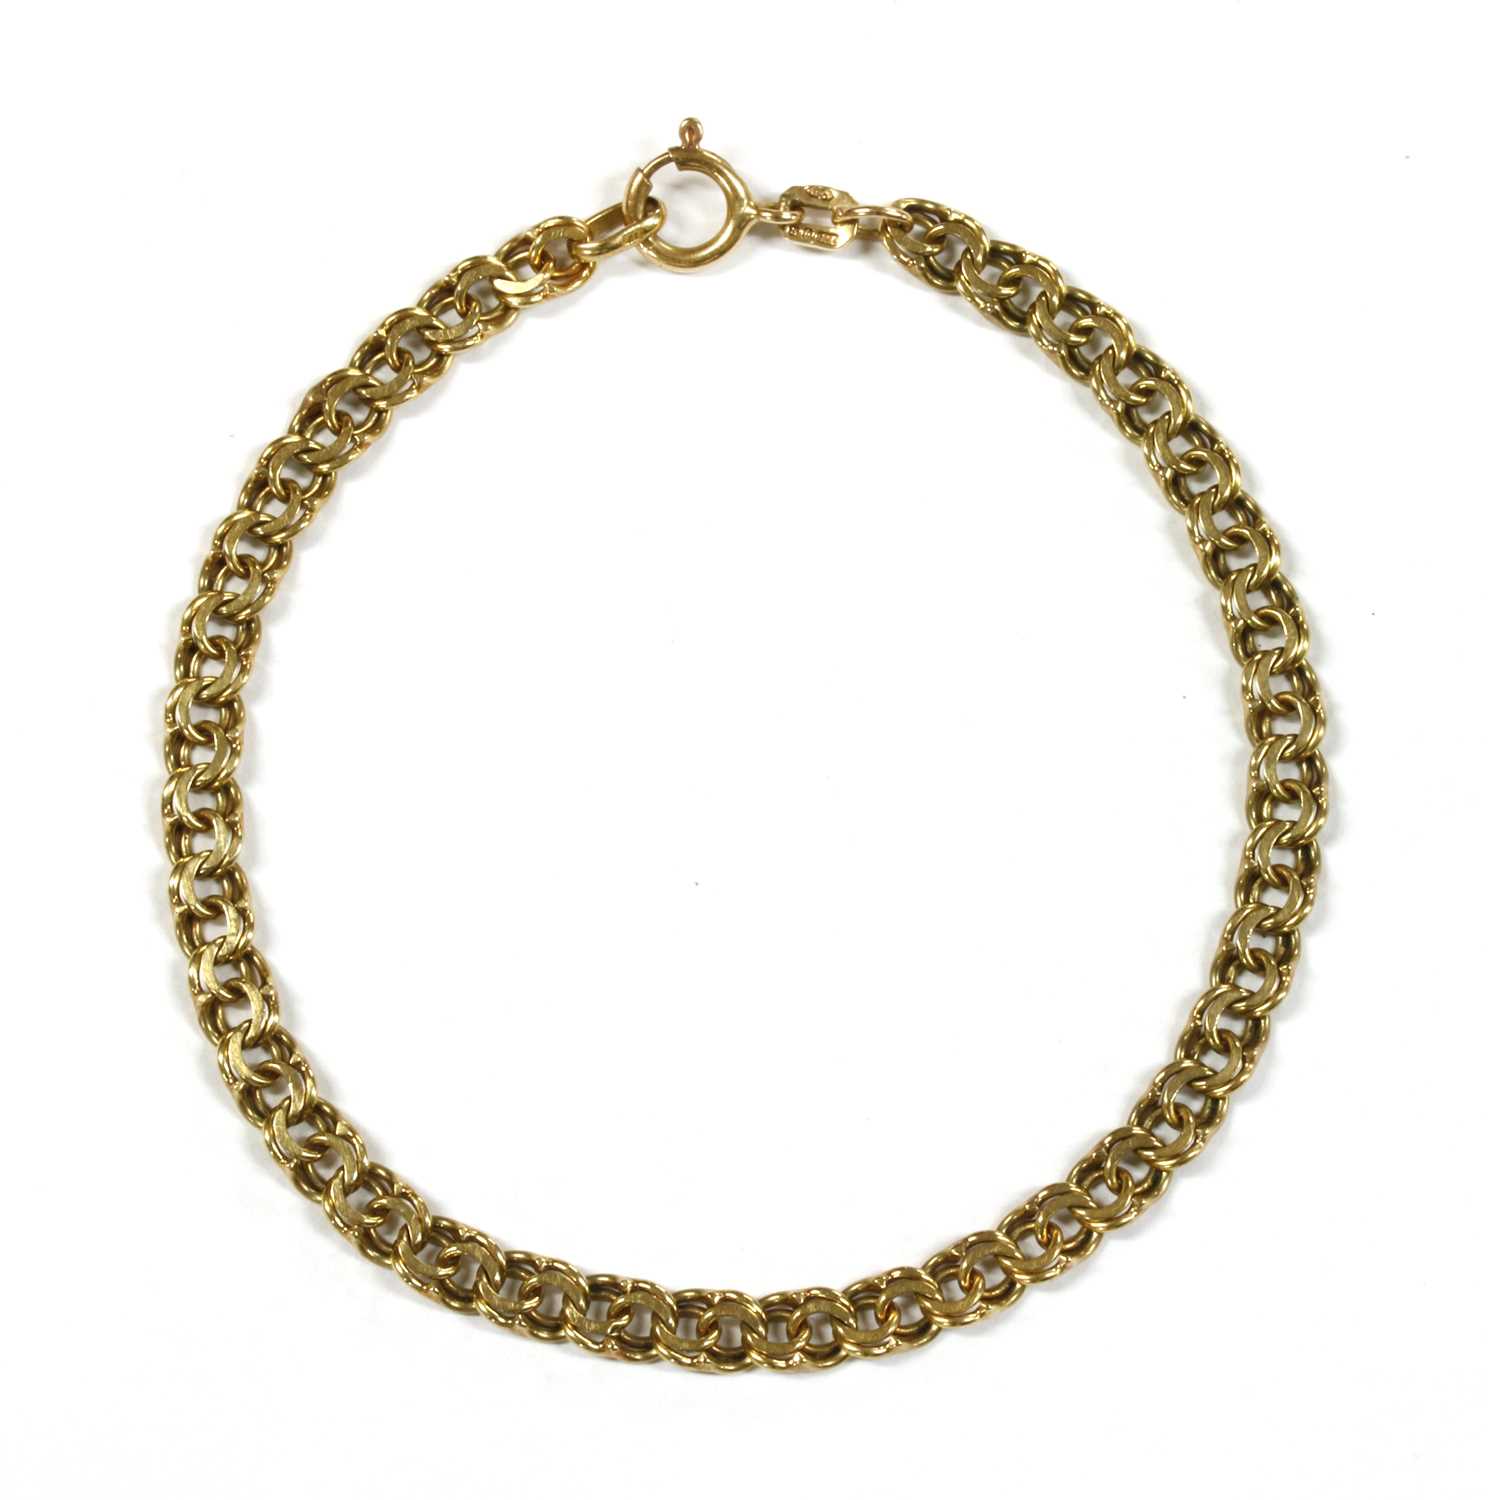 Lot 78 - A 9ct gold bracelet